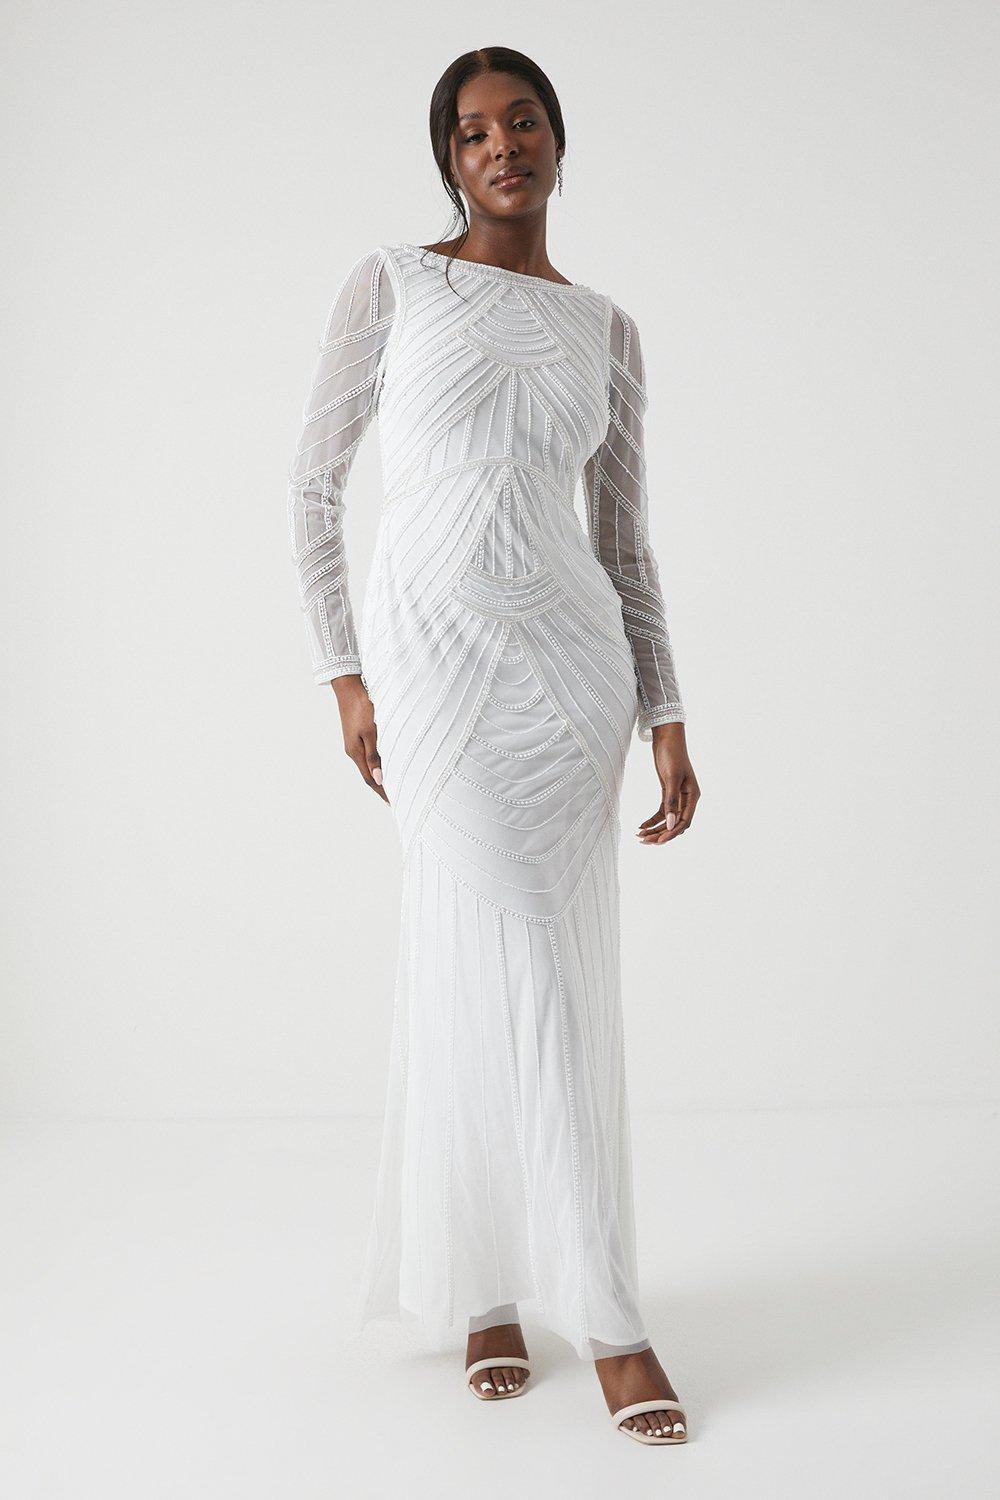 Deco Beadwork Long Sleeve Wedding Dress - Ivory